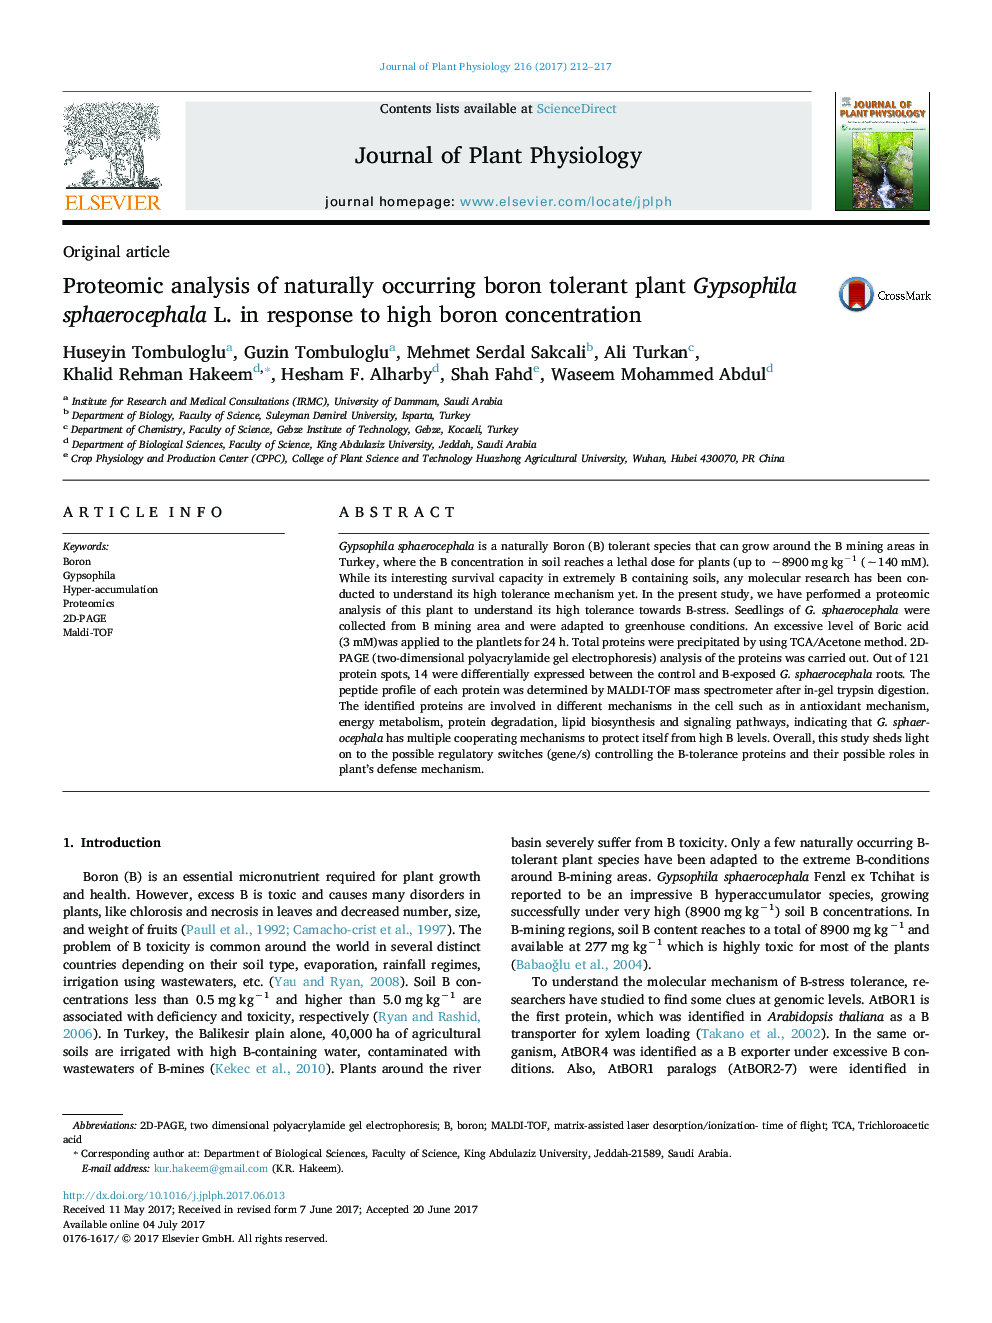 Original articleProteomic analysis of naturally occurring boron tolerant plant Gypsophila sphaerocephala L. in response to high boron concentration